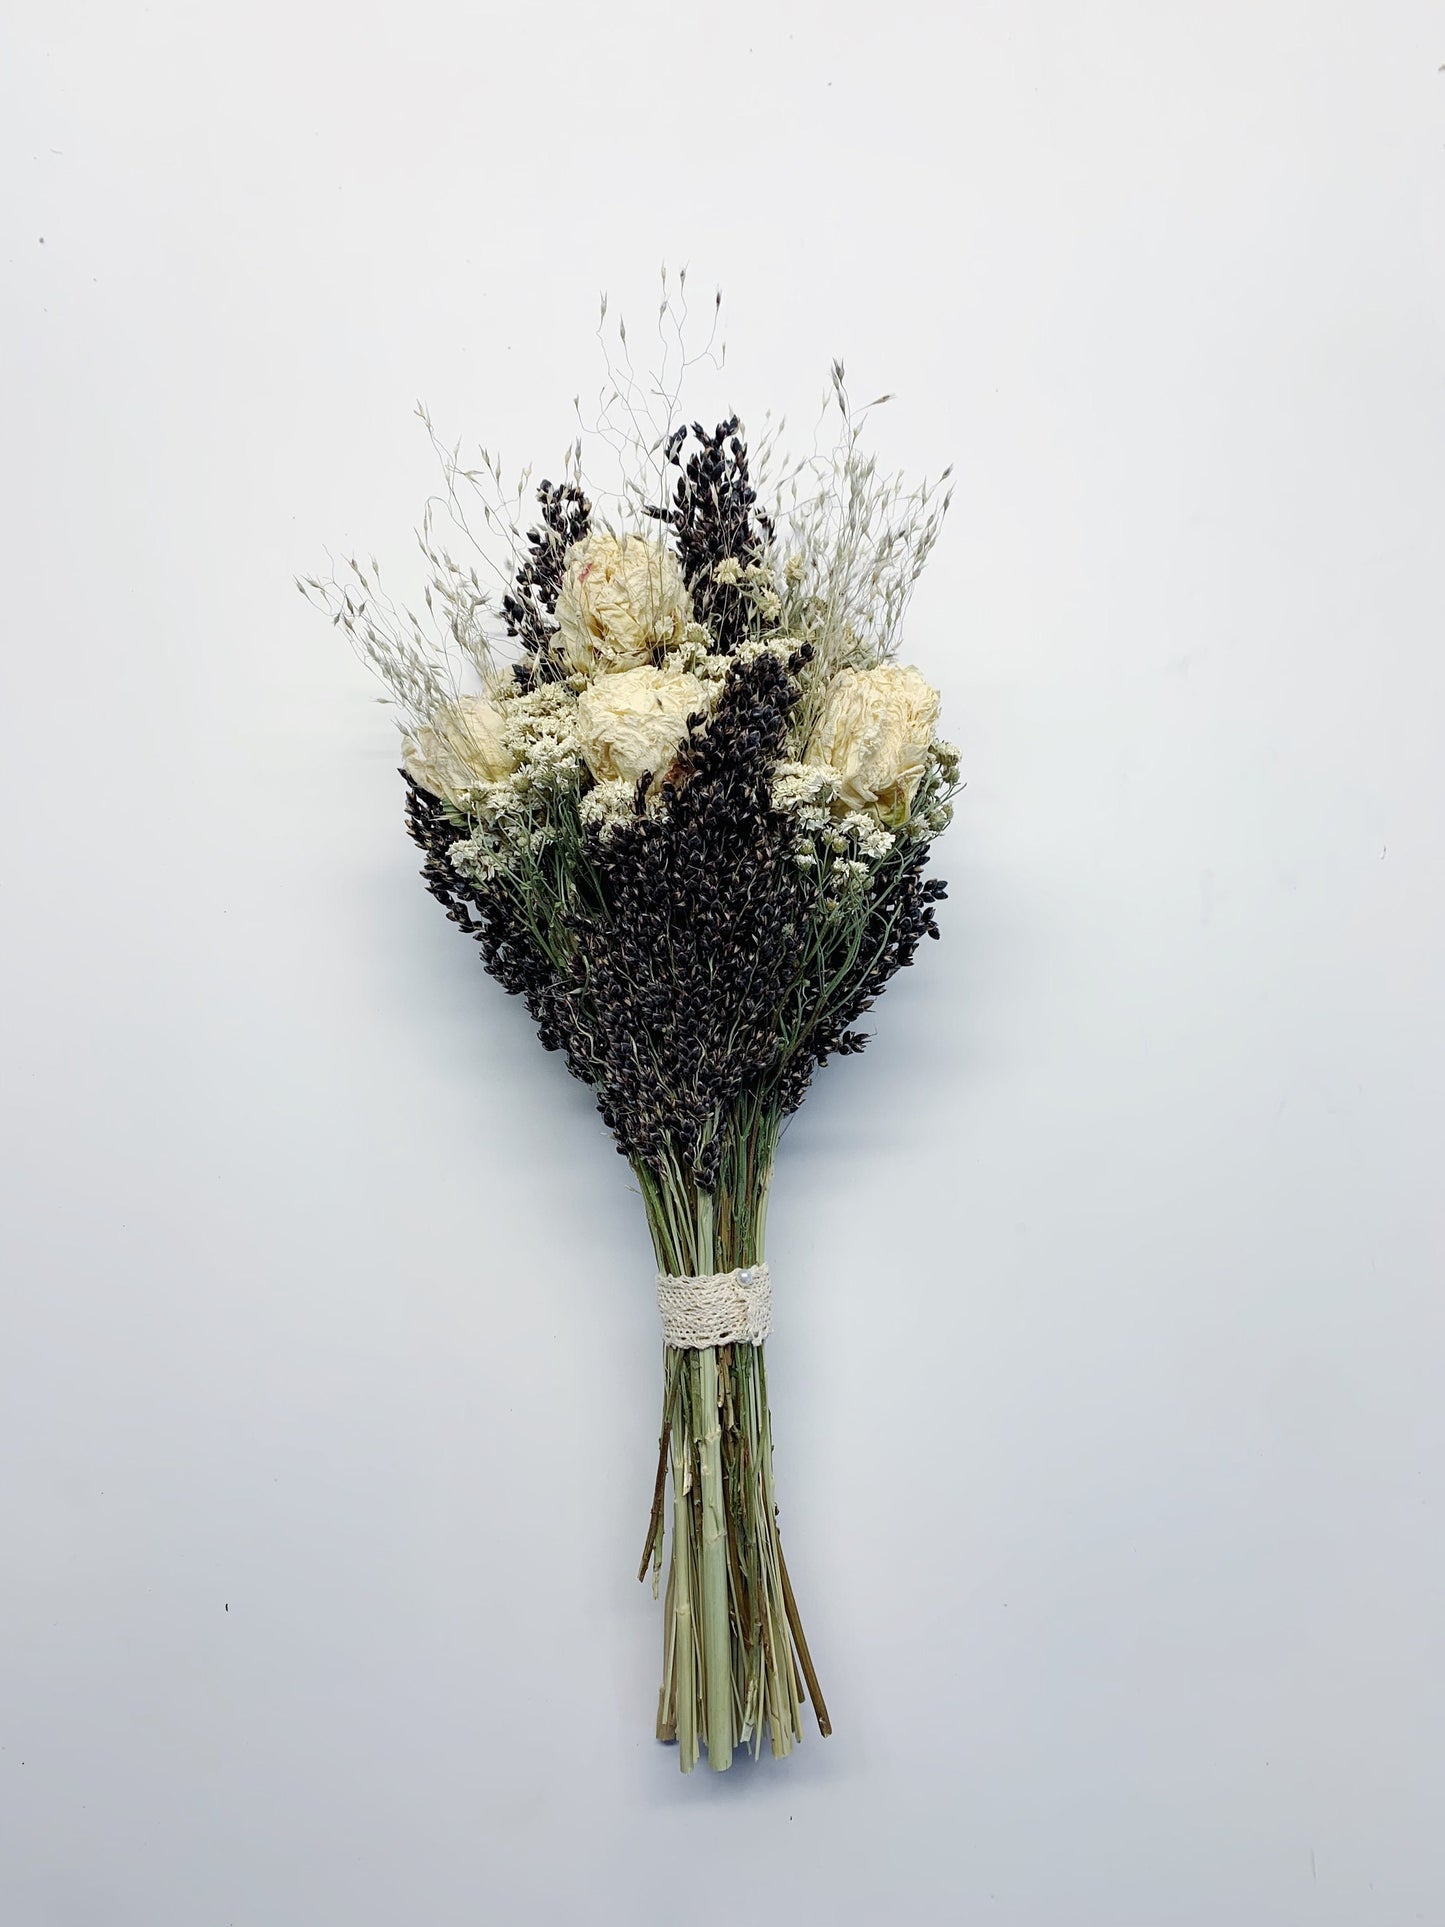 Wedding Bouquet, Dried Flowers, Presreved Black, white, Cream, White Peony, Achillea of Pearl, Indian Rice, Black Sorghum, bridal, Cream